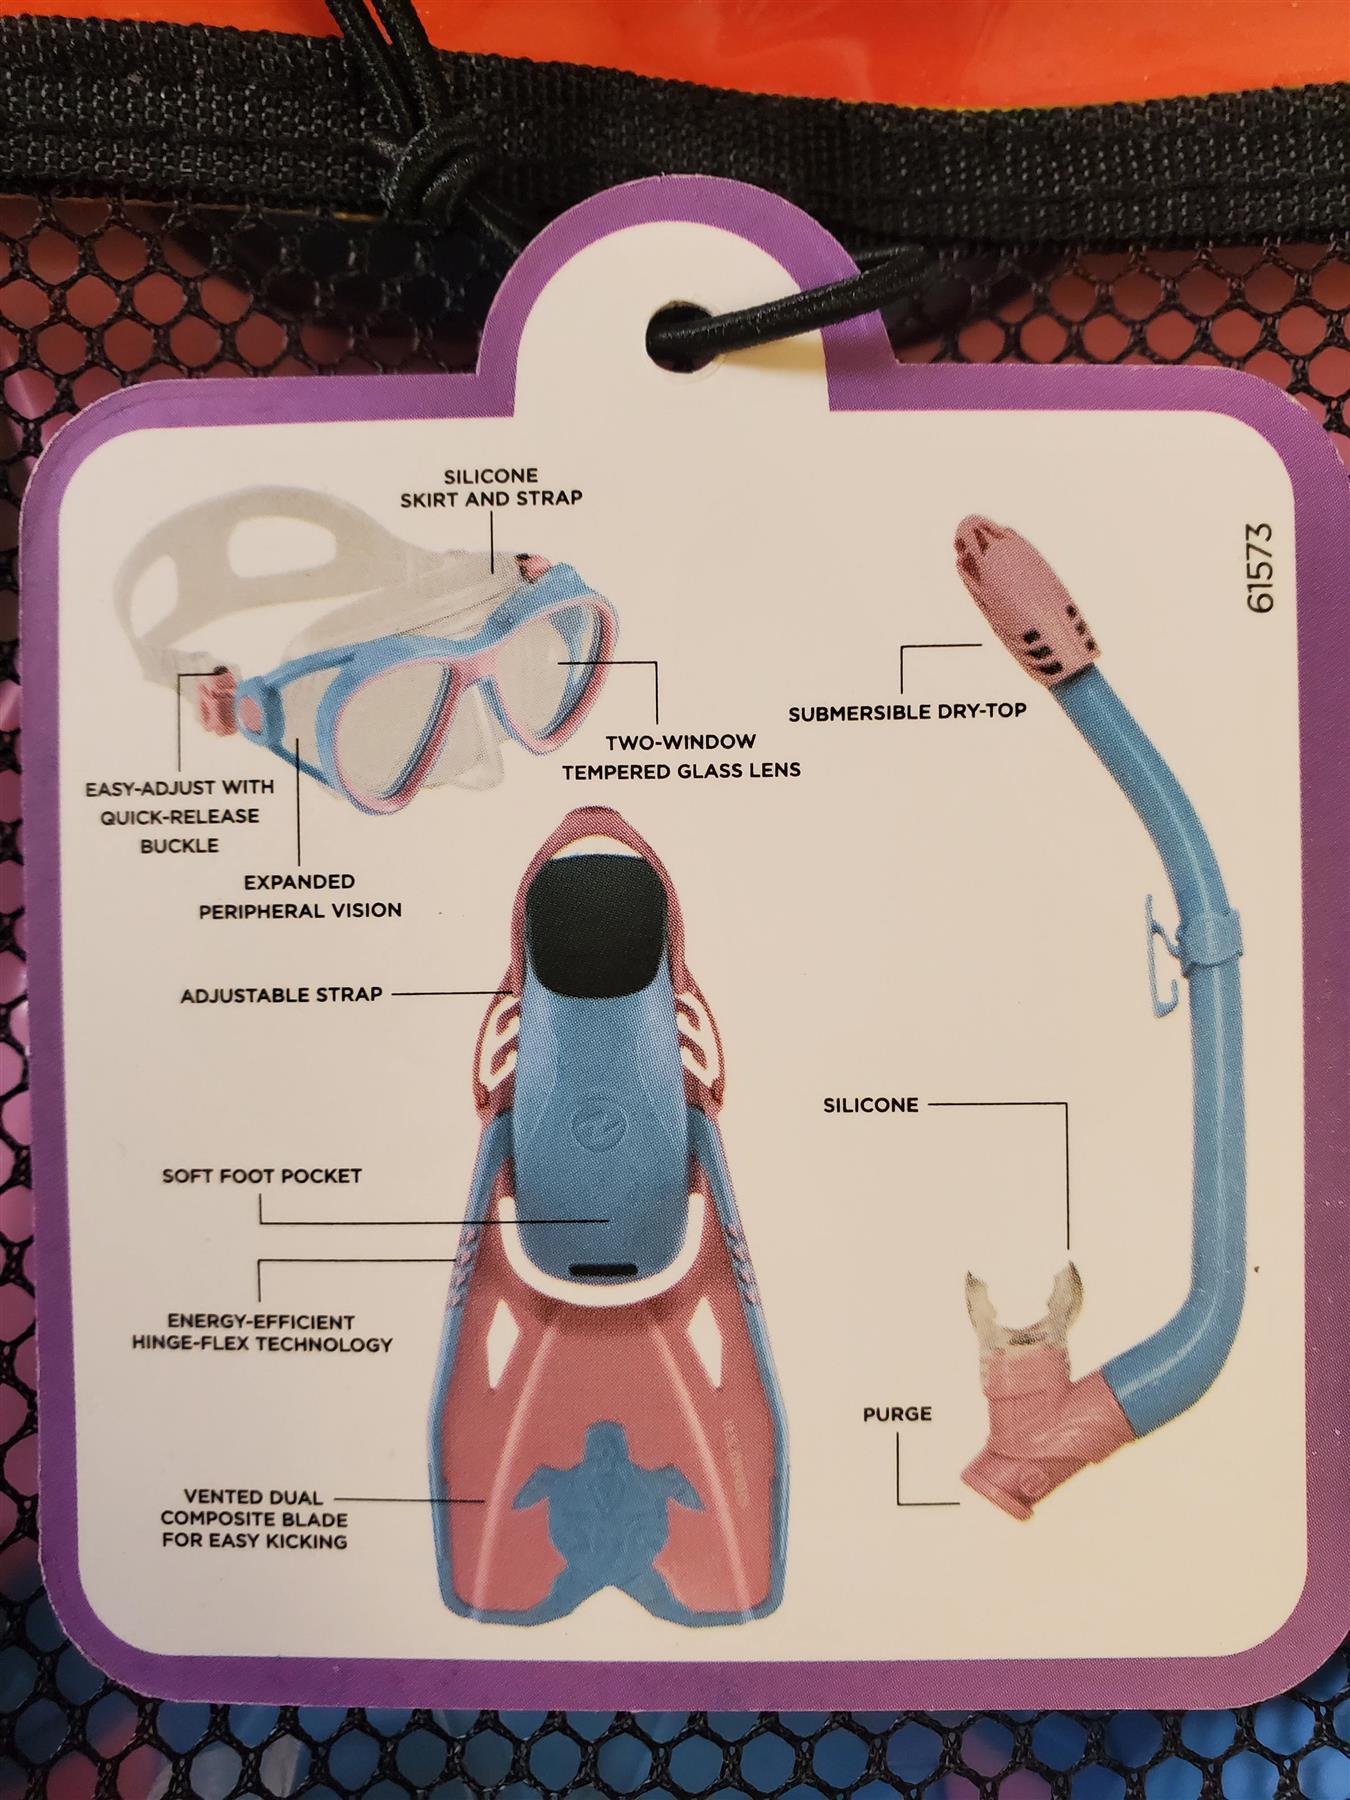 US Divers Junior Premium Travel Ready Snorkel Set Youth Size Medium Pink